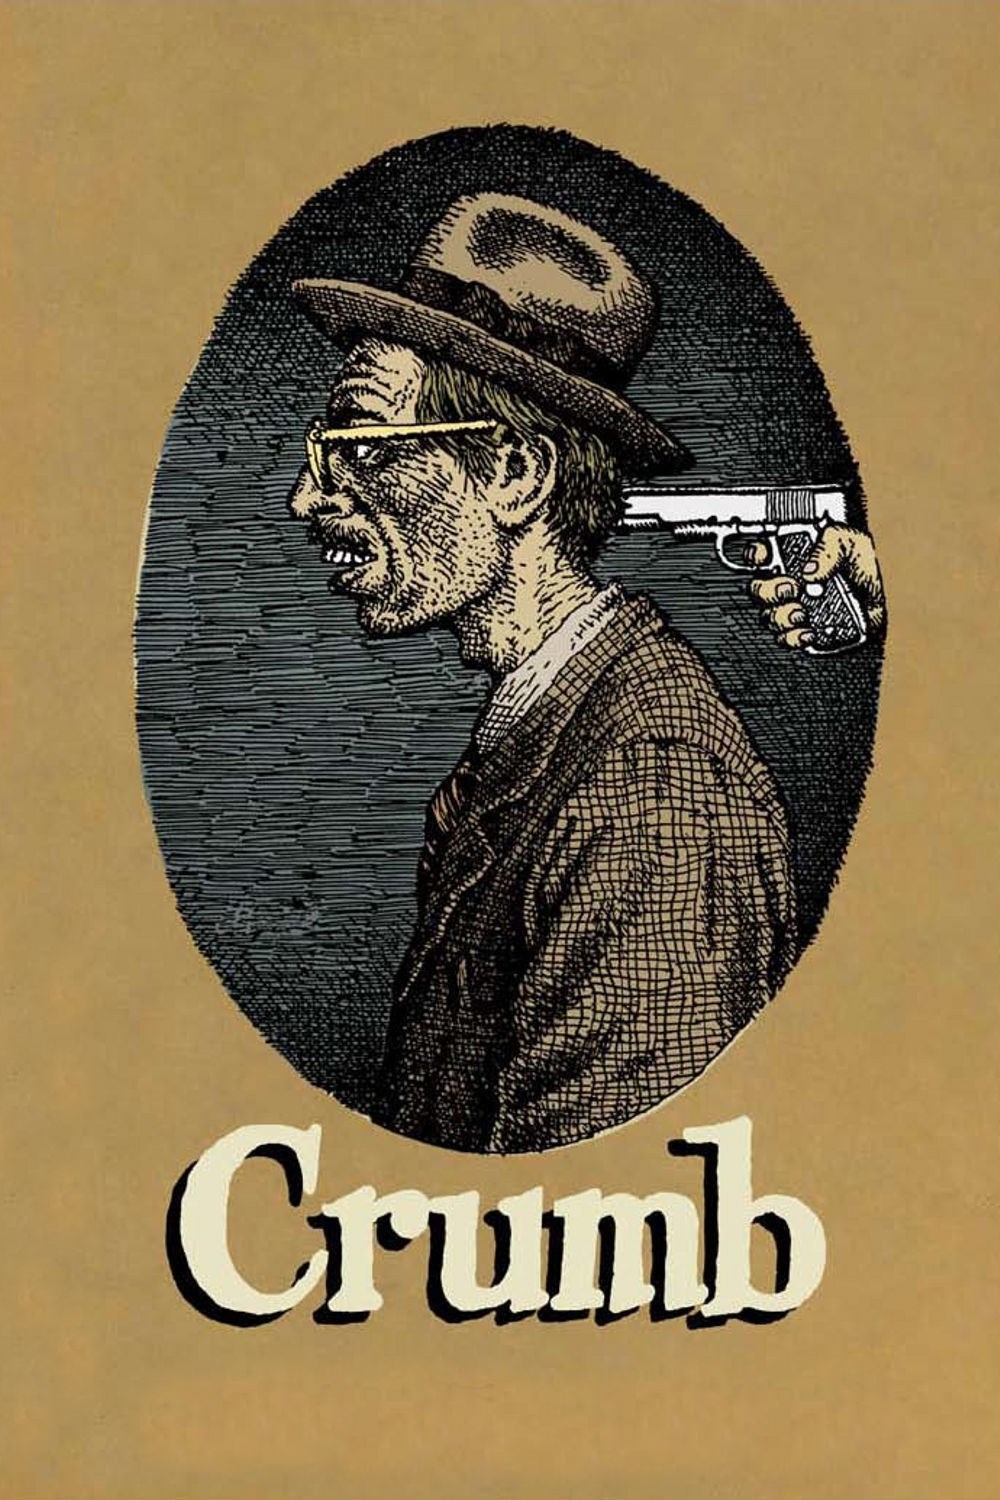 Nonton film Crumb layarkaca21 indoxx1 ganool online streaming terbaru